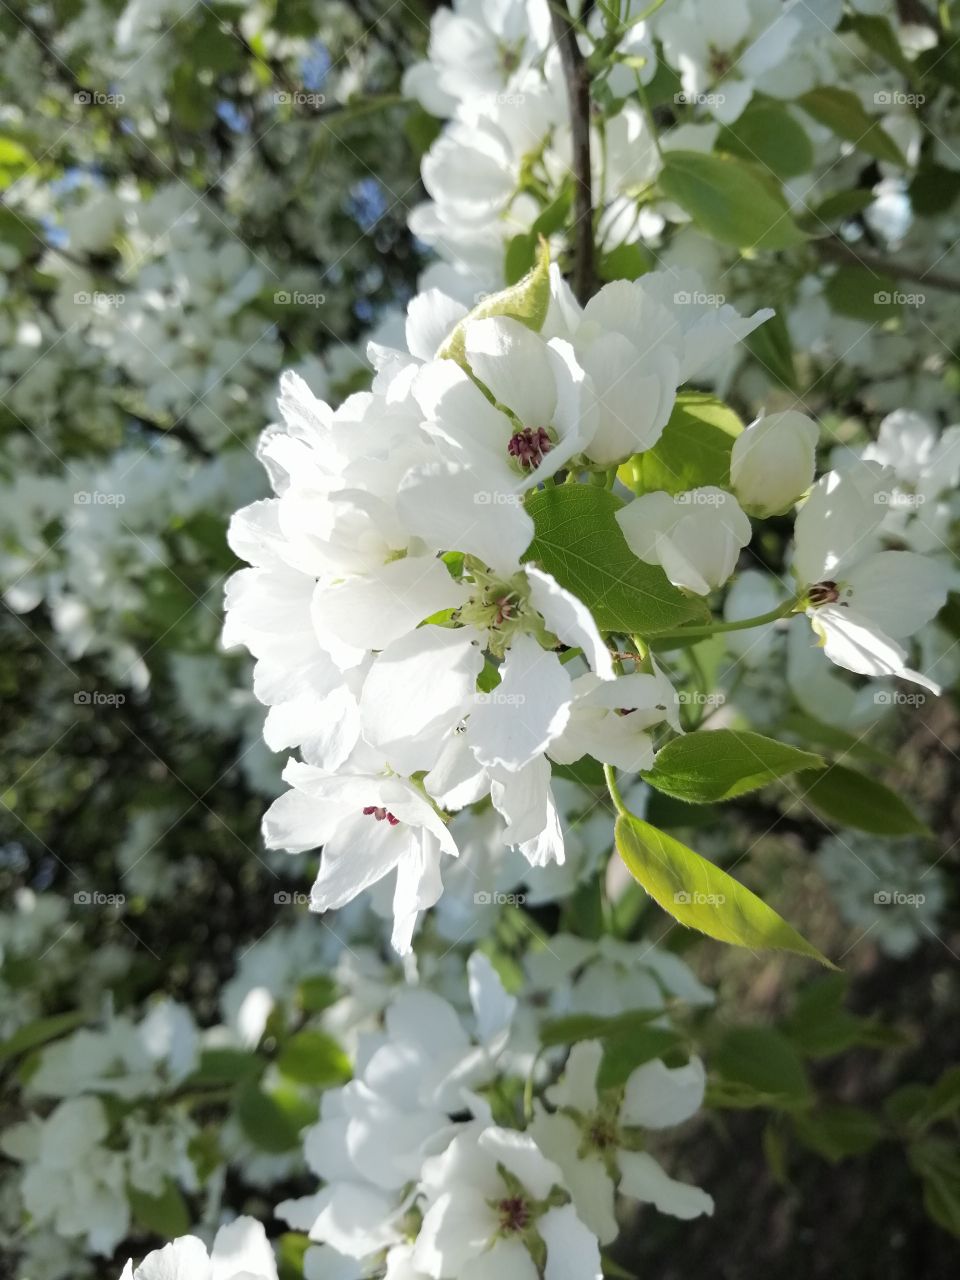 Apple tree in bloom